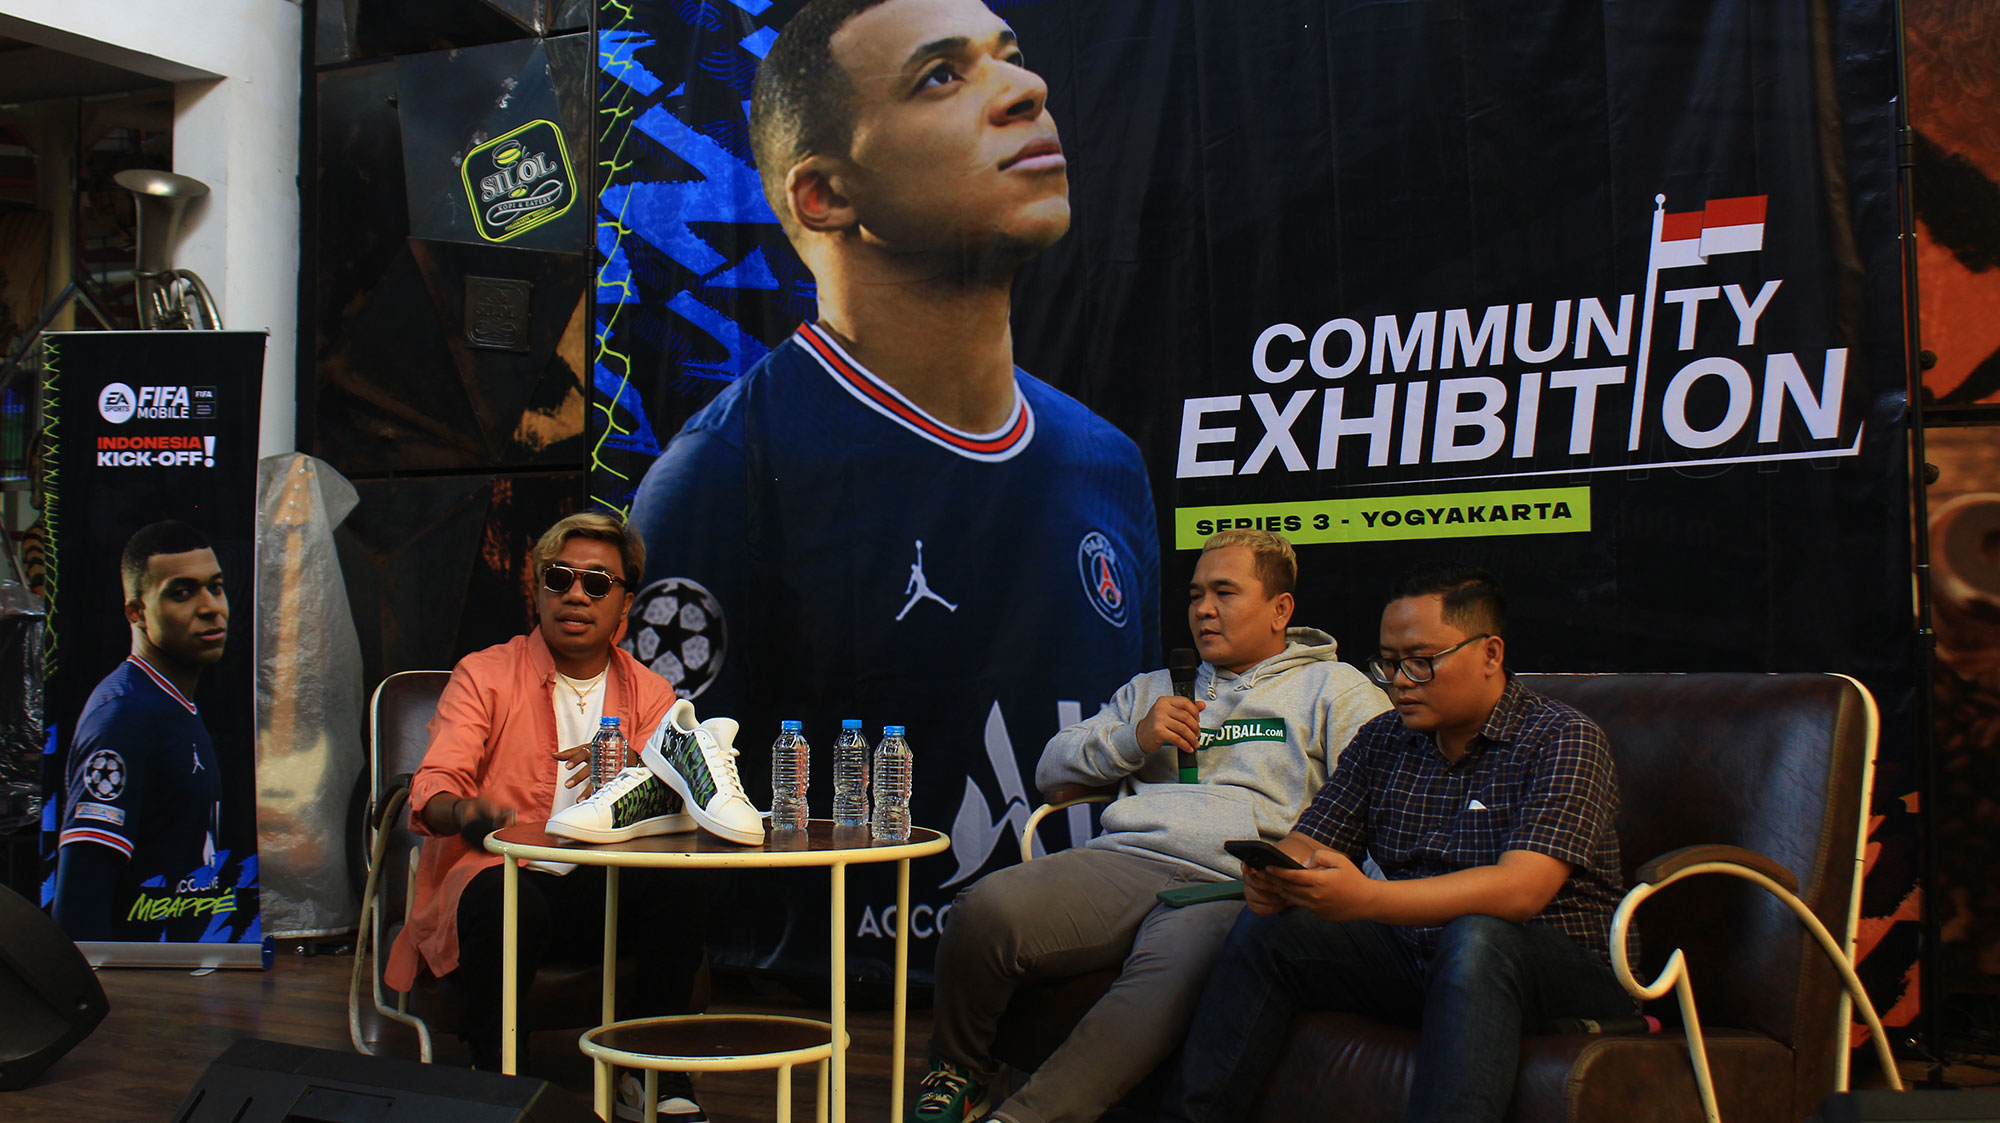 FIFA Mobile Community ID Sukses Gelar FIFA Mobile Community Exhibition Weekend Series 3 - Yogyakarta